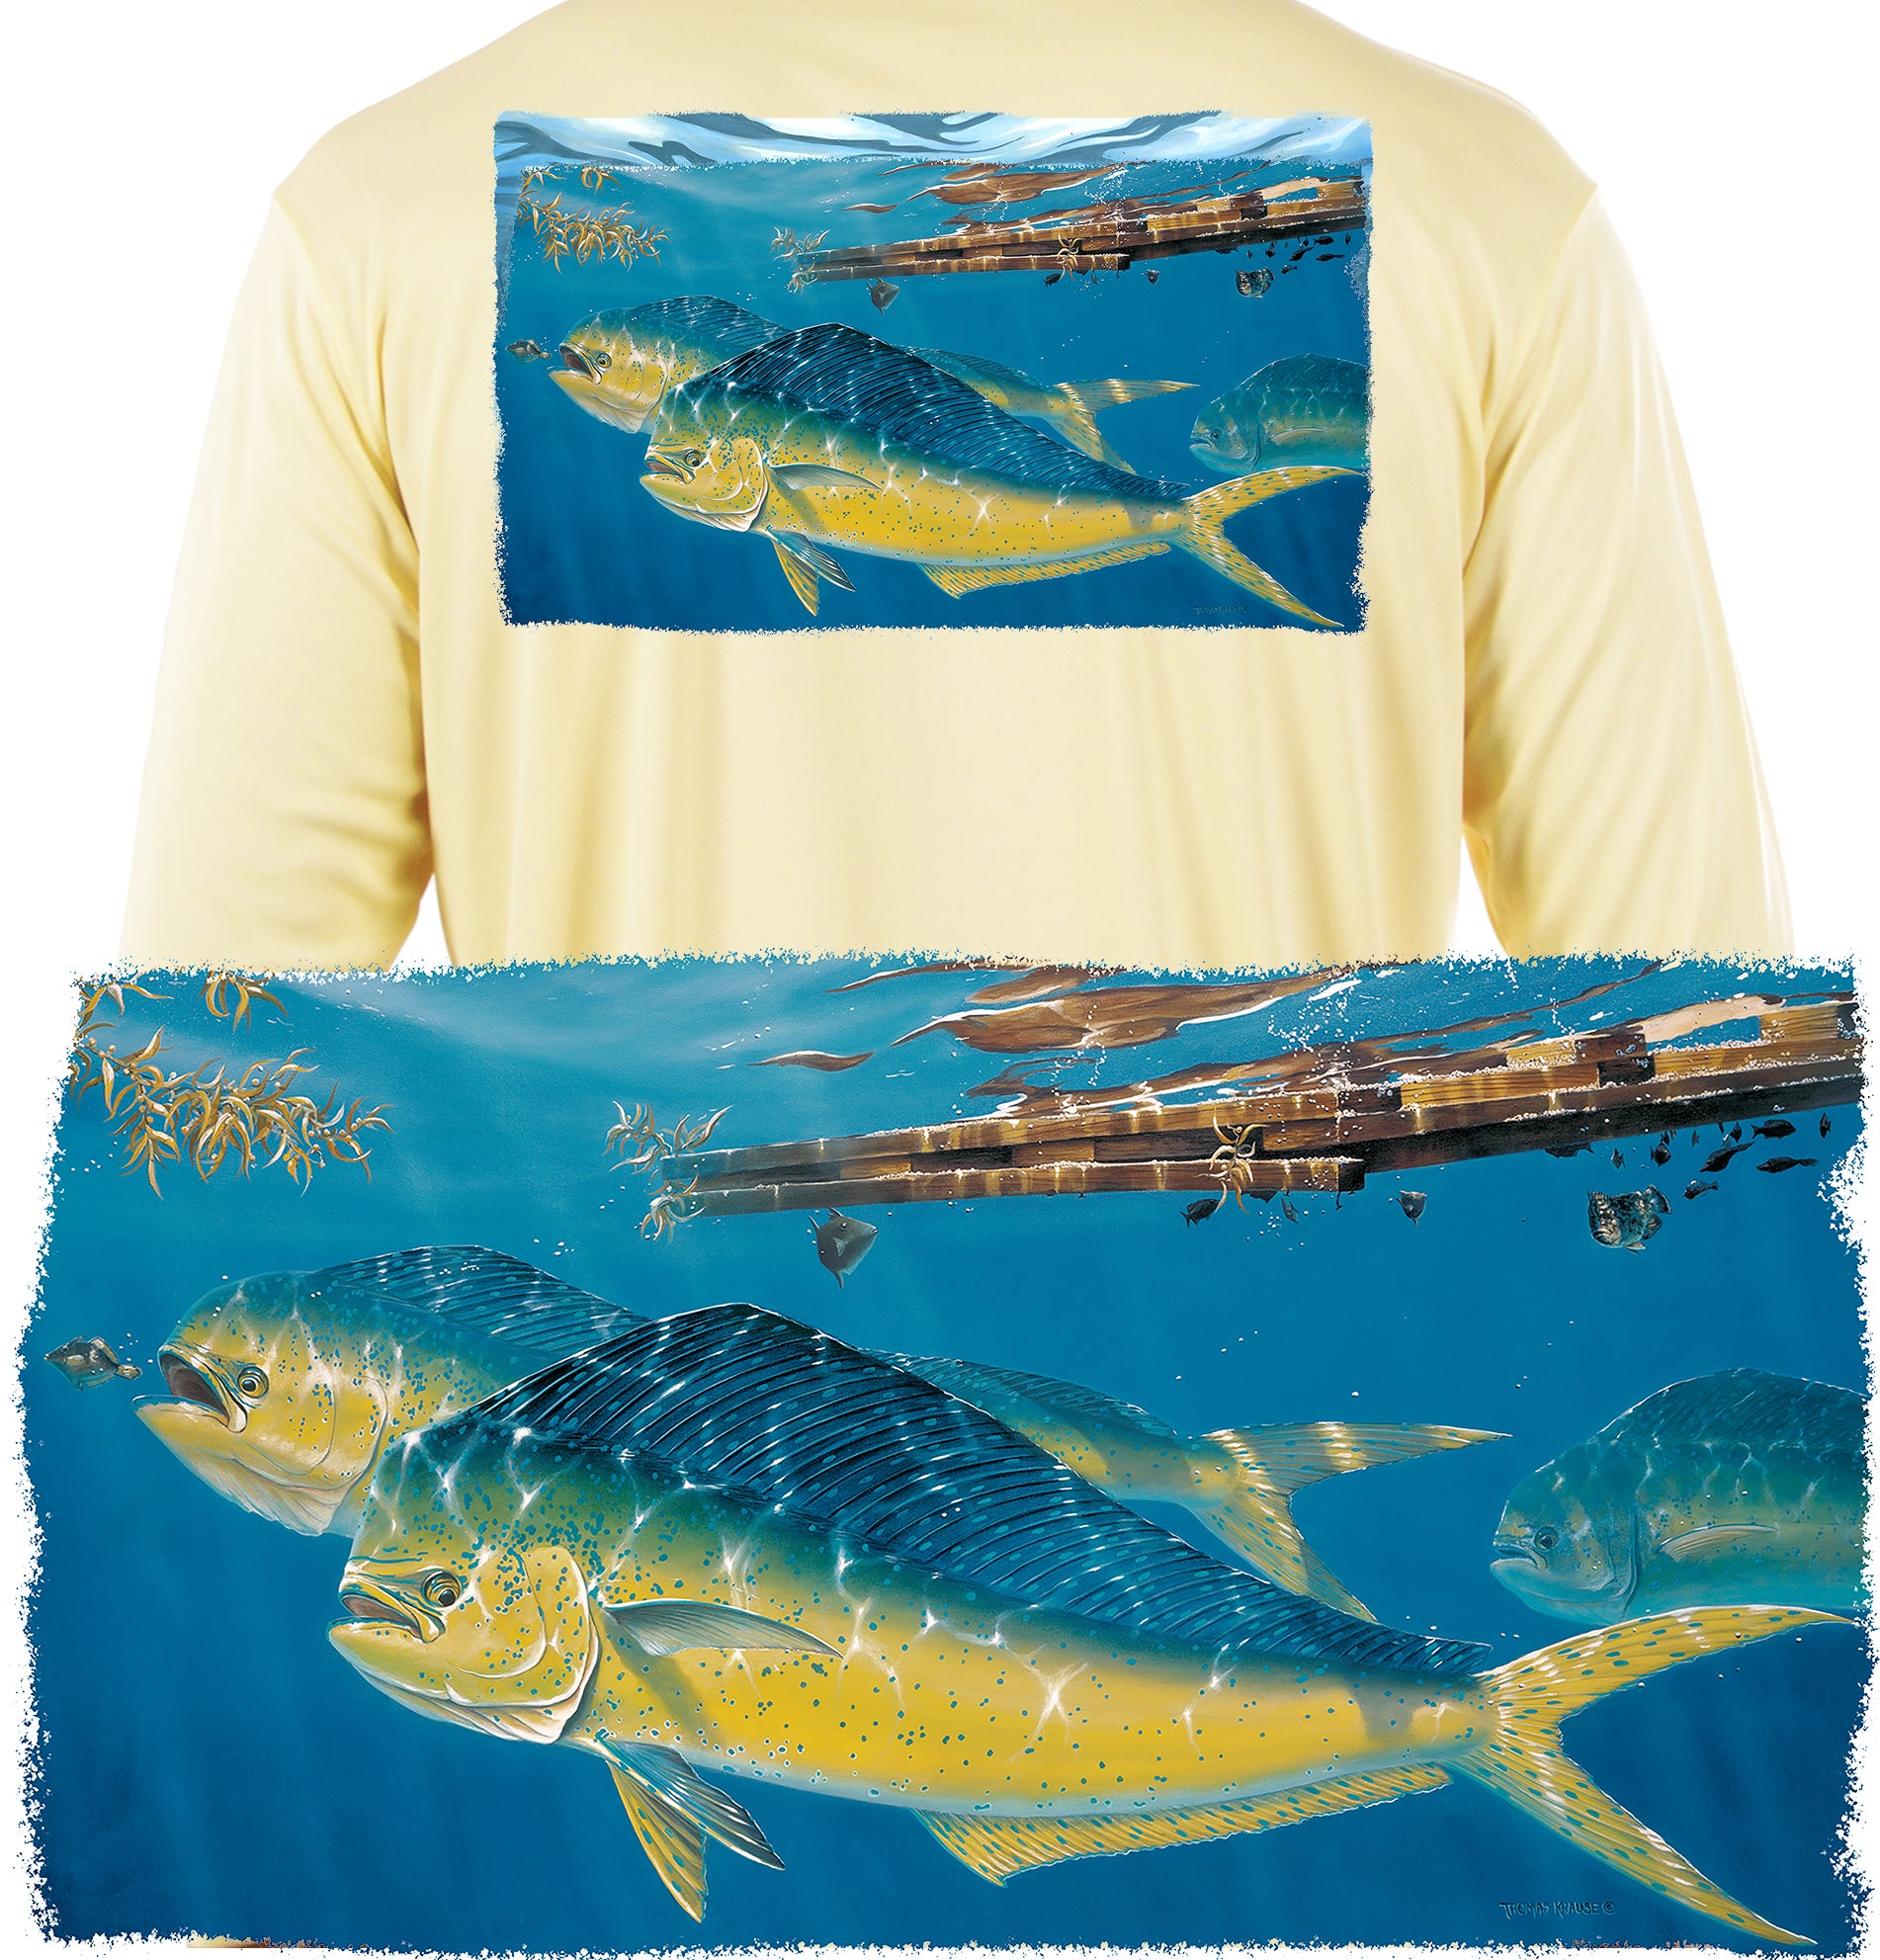 Mahi Dorado Dolfin Fishing Shirts Men's Quick Dry Lightweight UPF 50+ Long Sleeve Shirts Rash Guard Swim Shirts Hiking Shirts Moisture Wicking by